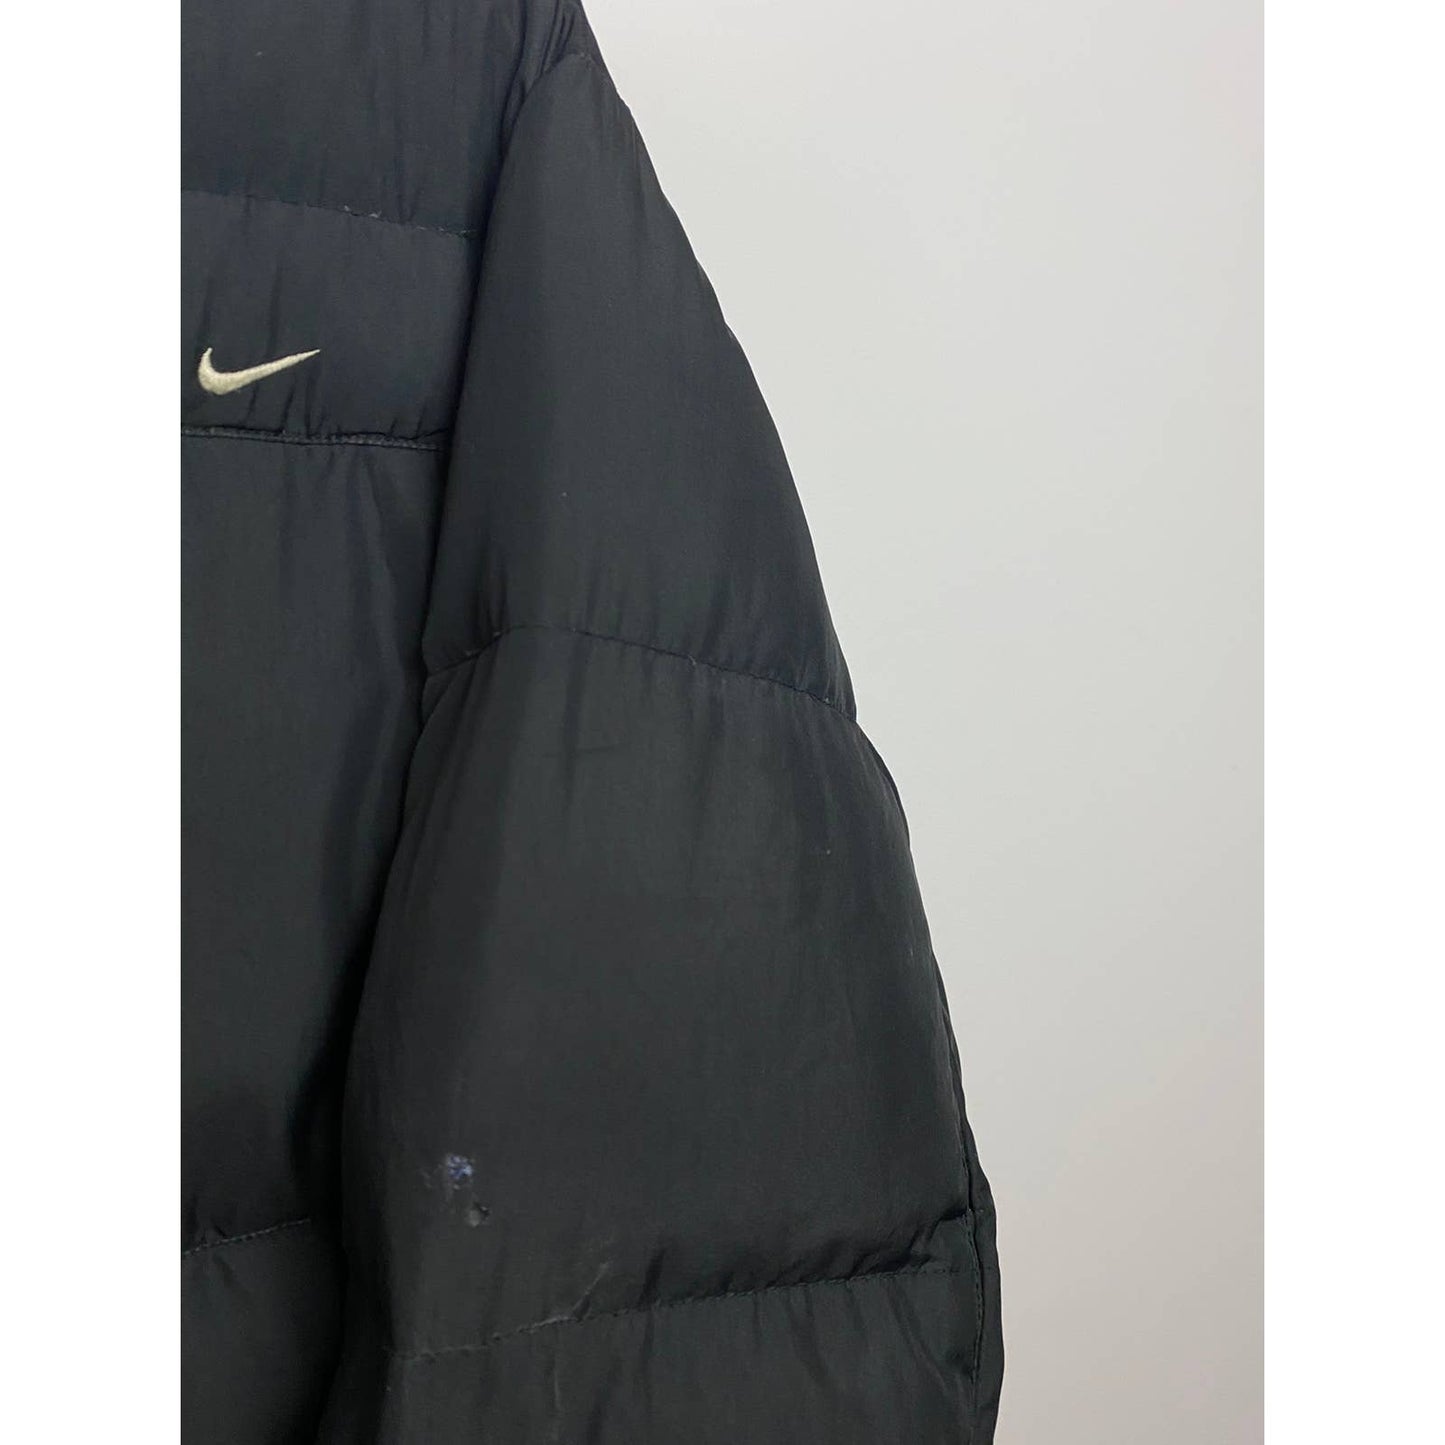 Nike vintage black cargo puffer jacket small swoosh 2000s